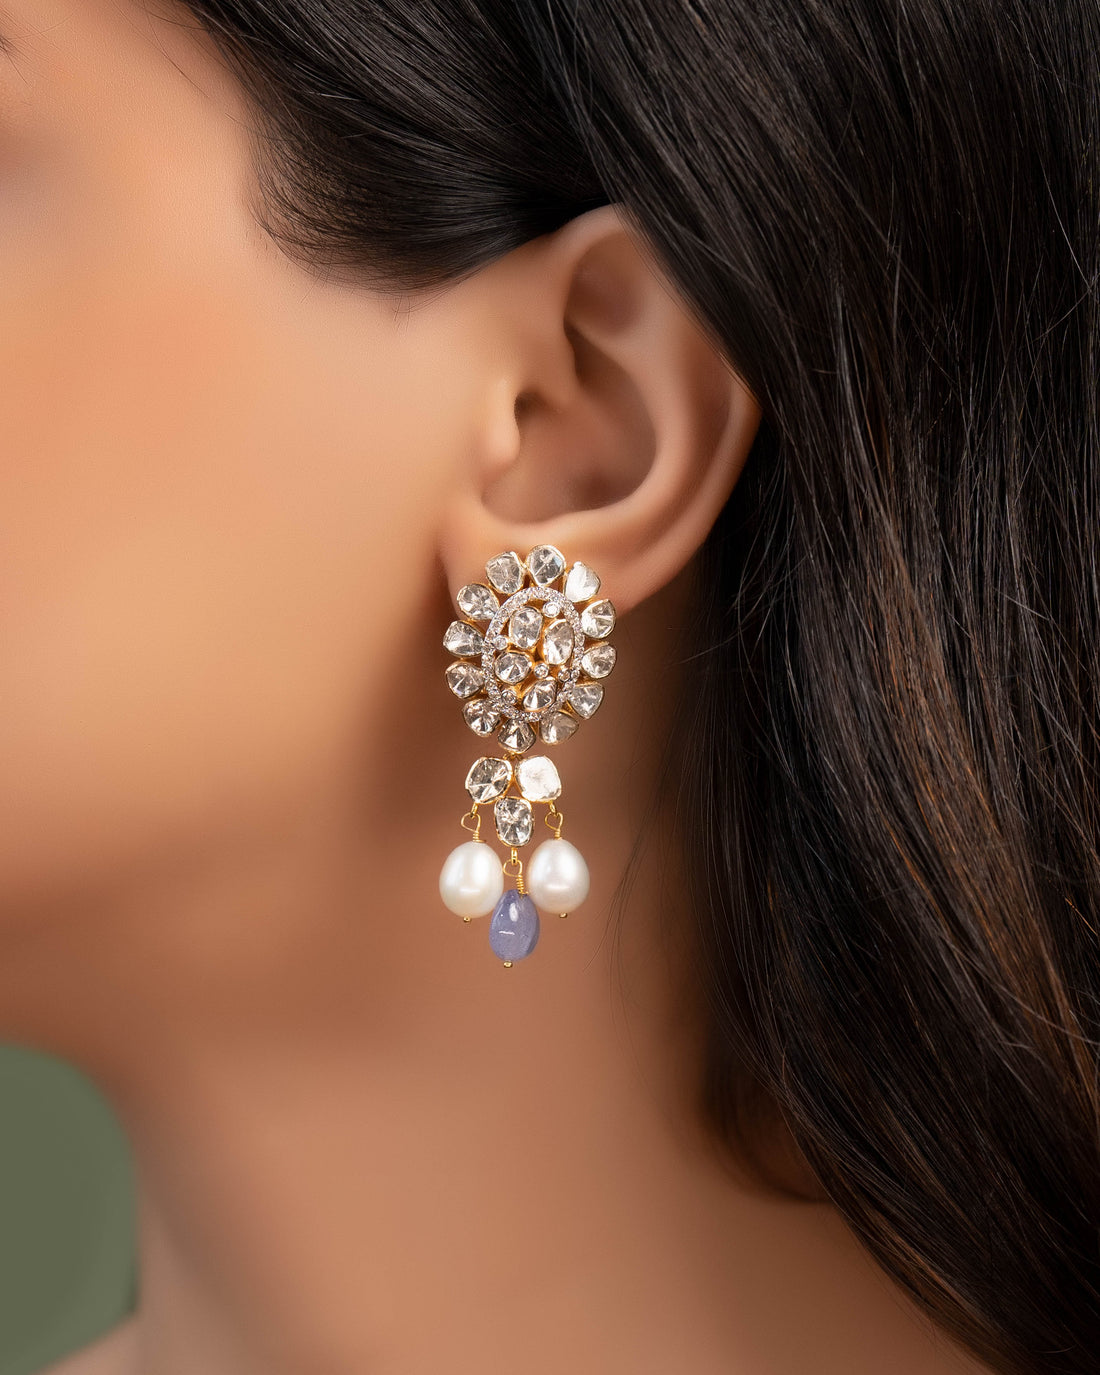 Suhani Polki And Diamond Long Earrings